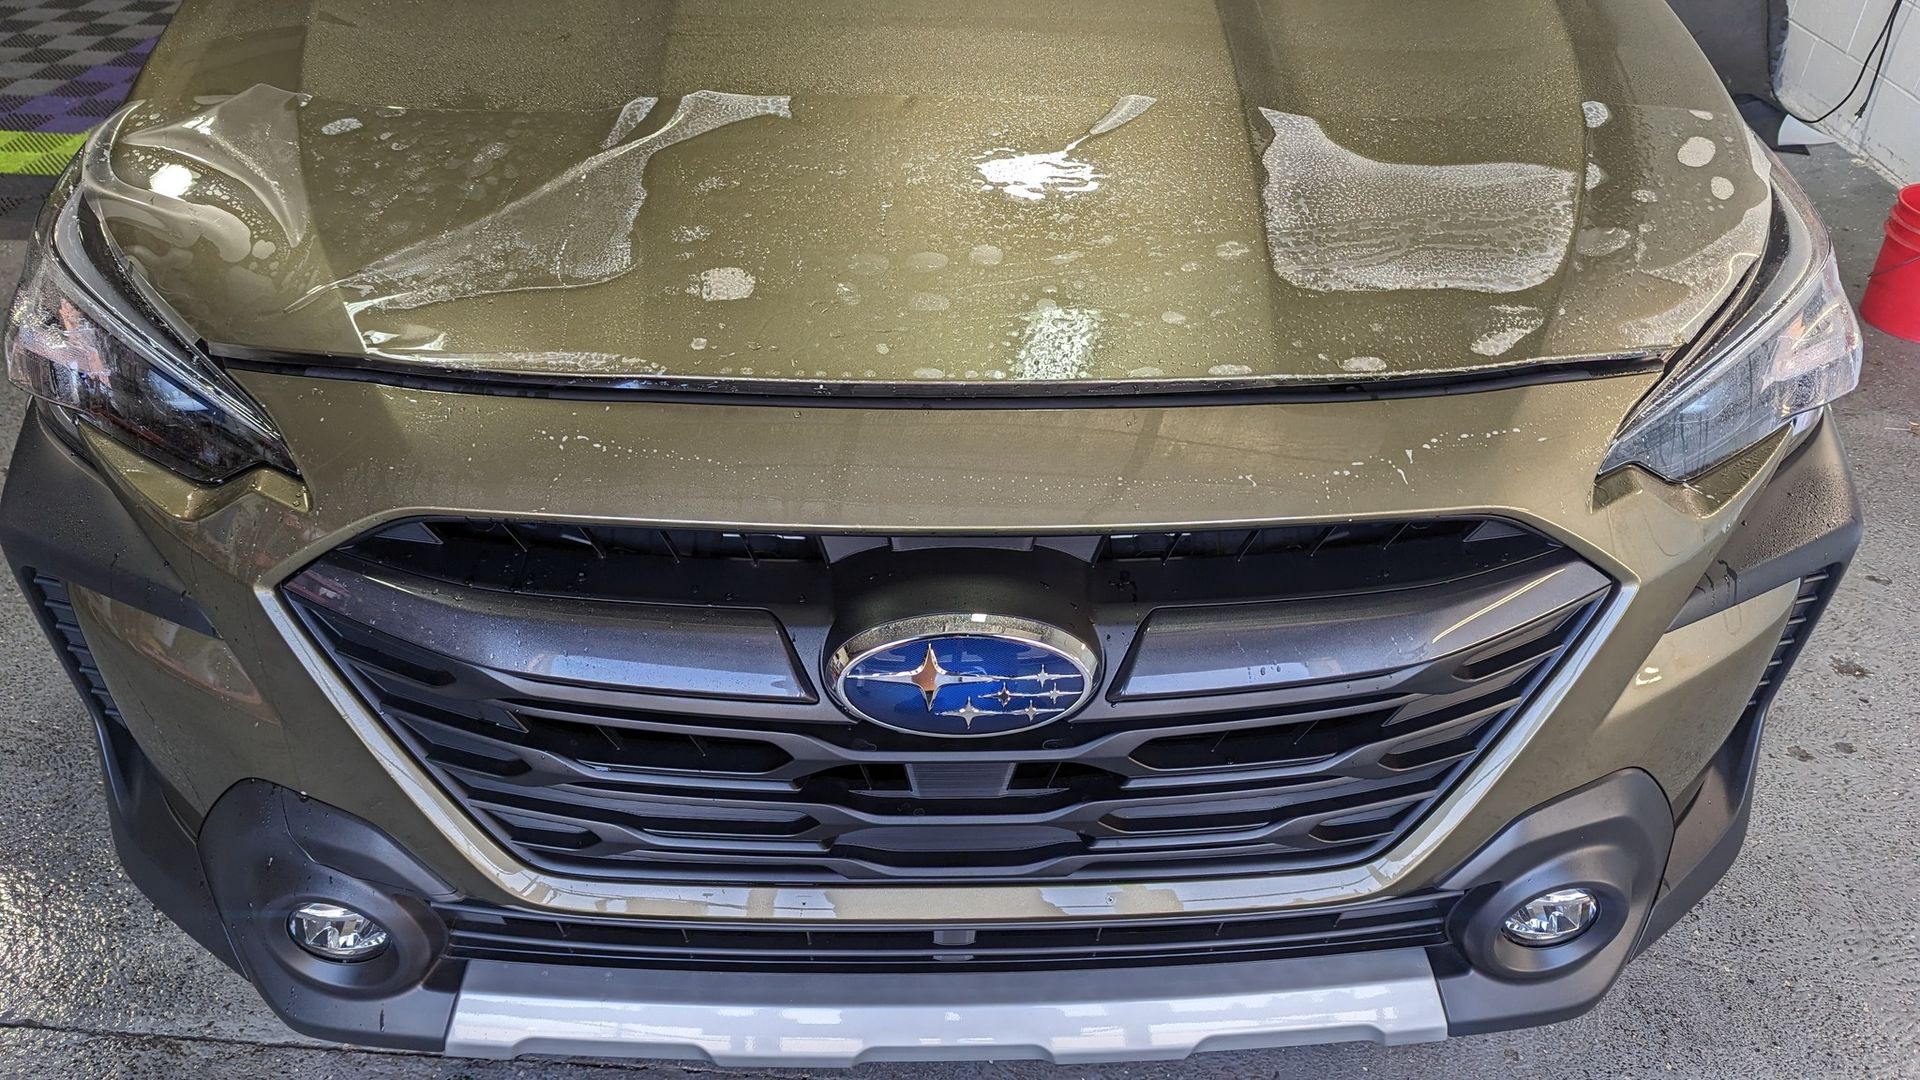 Subaru Getting PPF Installed On Hood